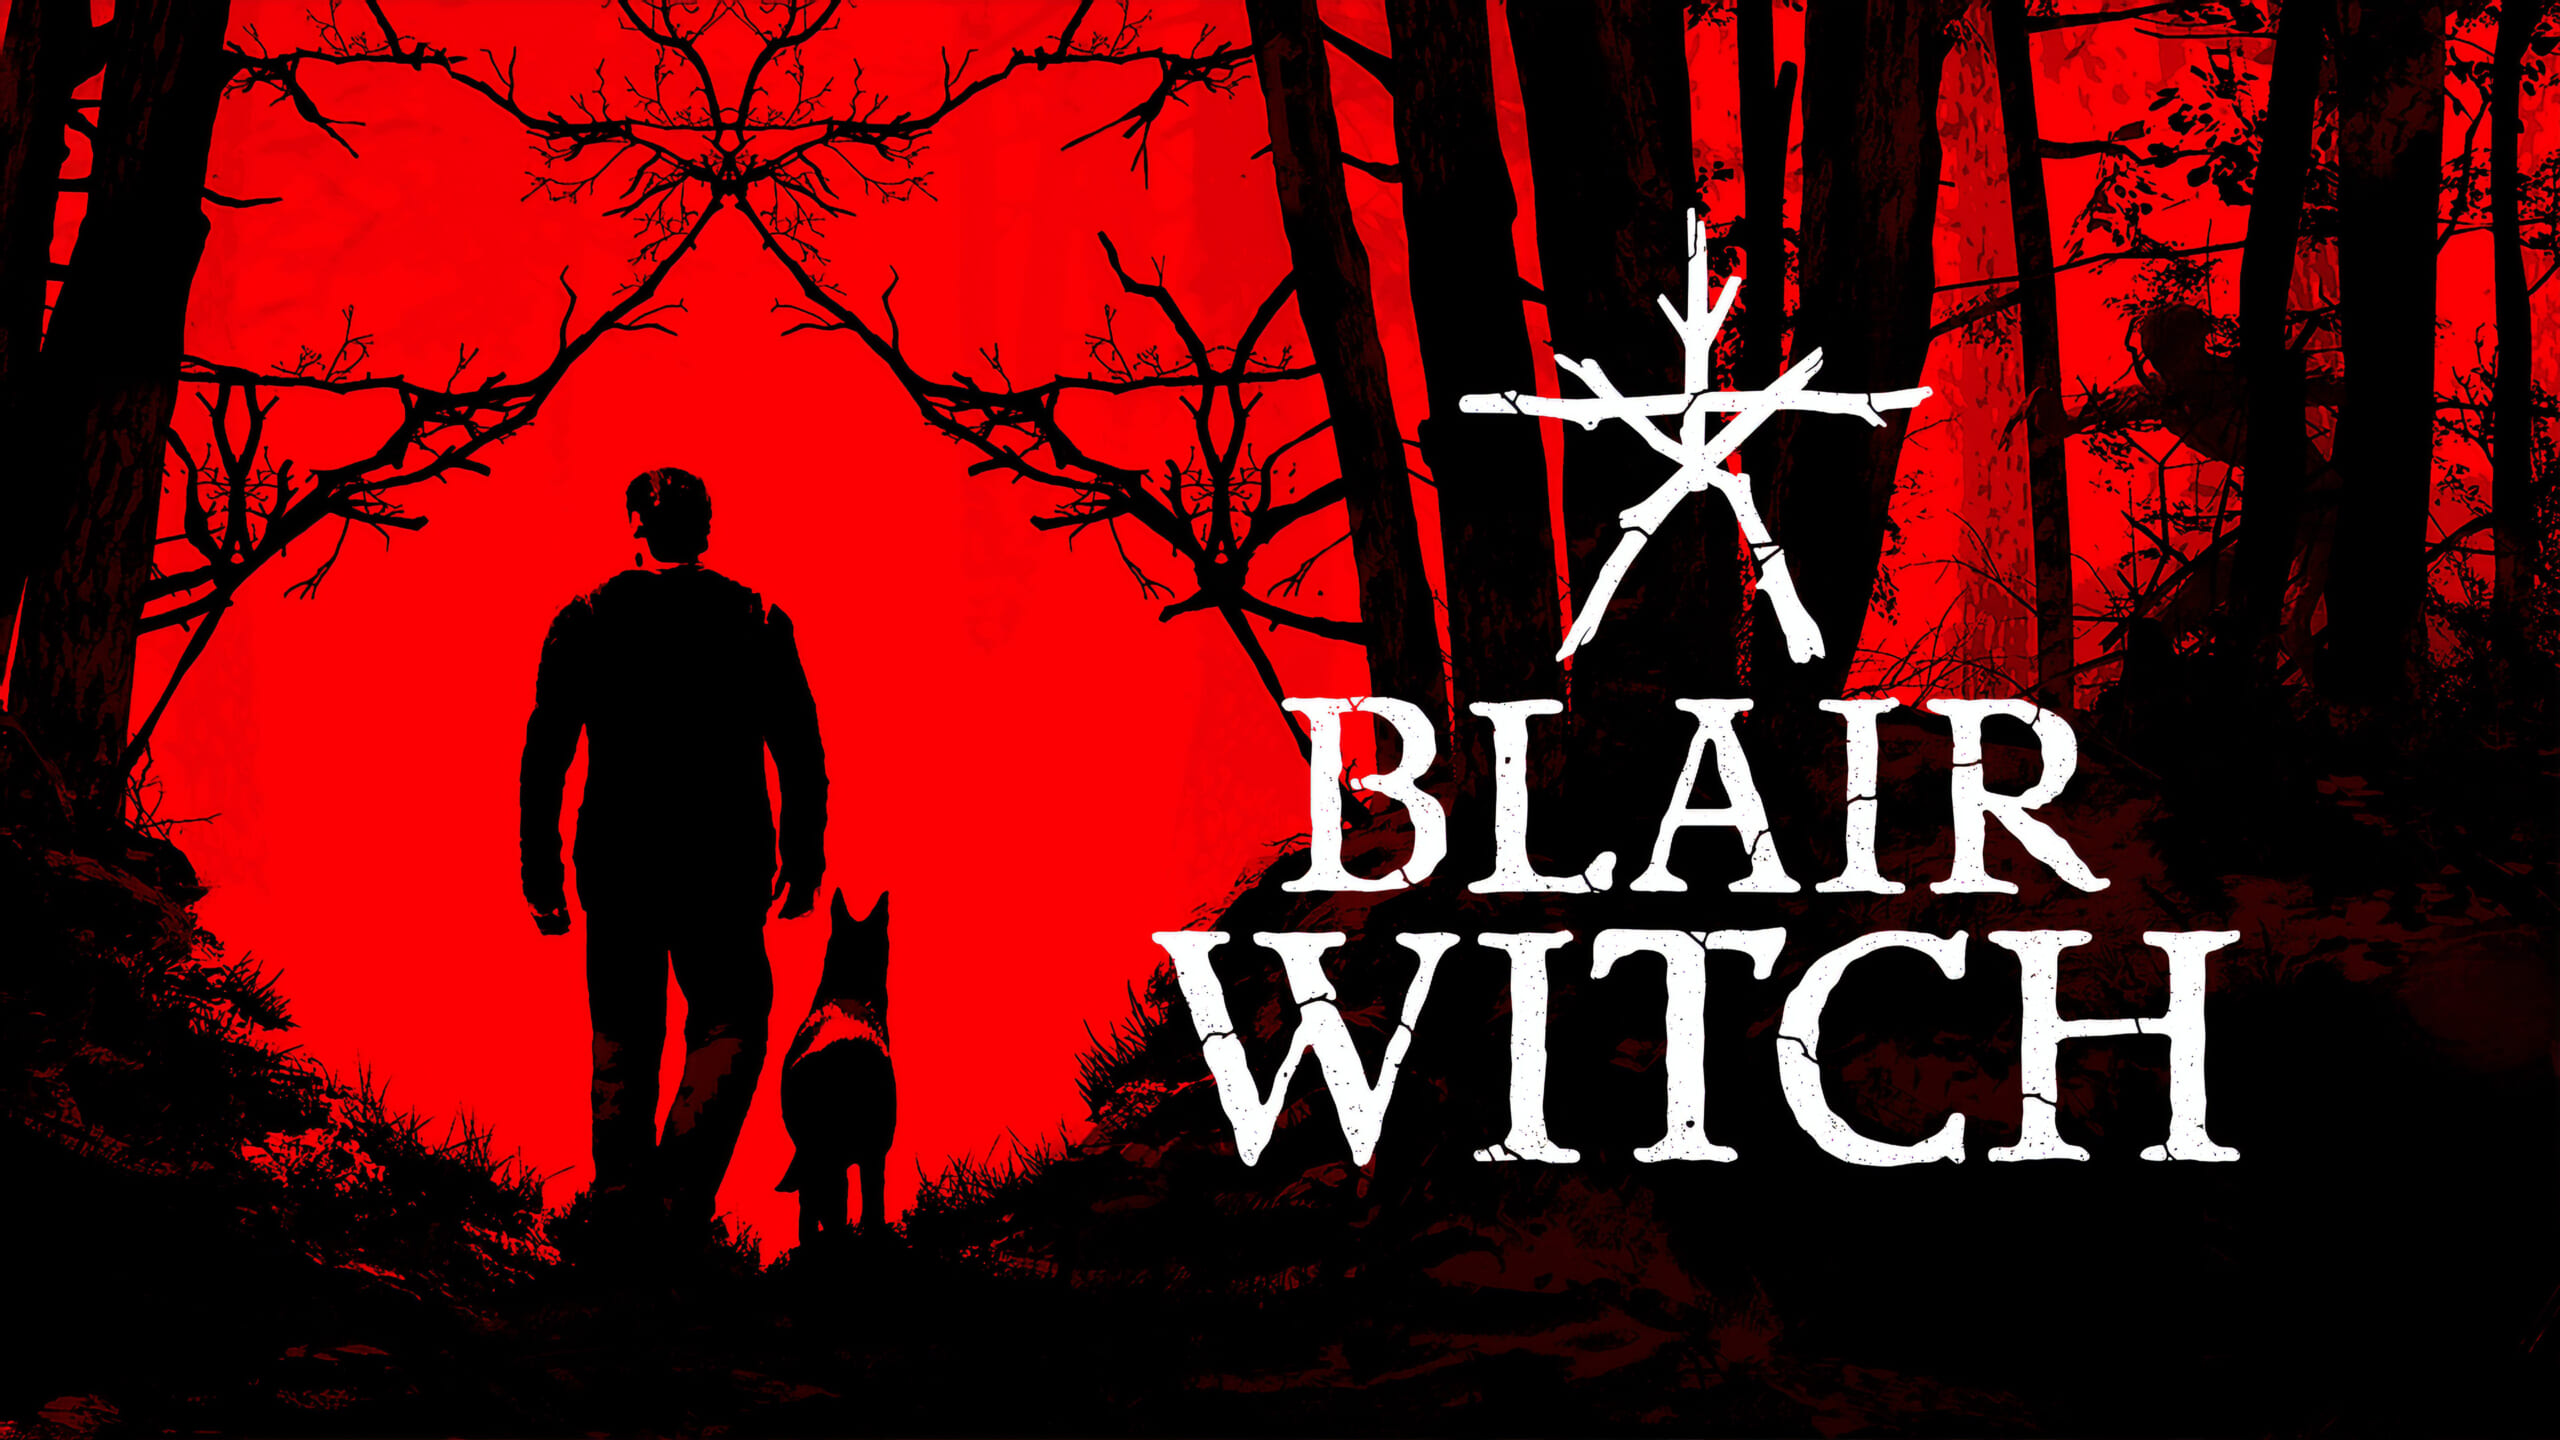 Blair Witch_keyart